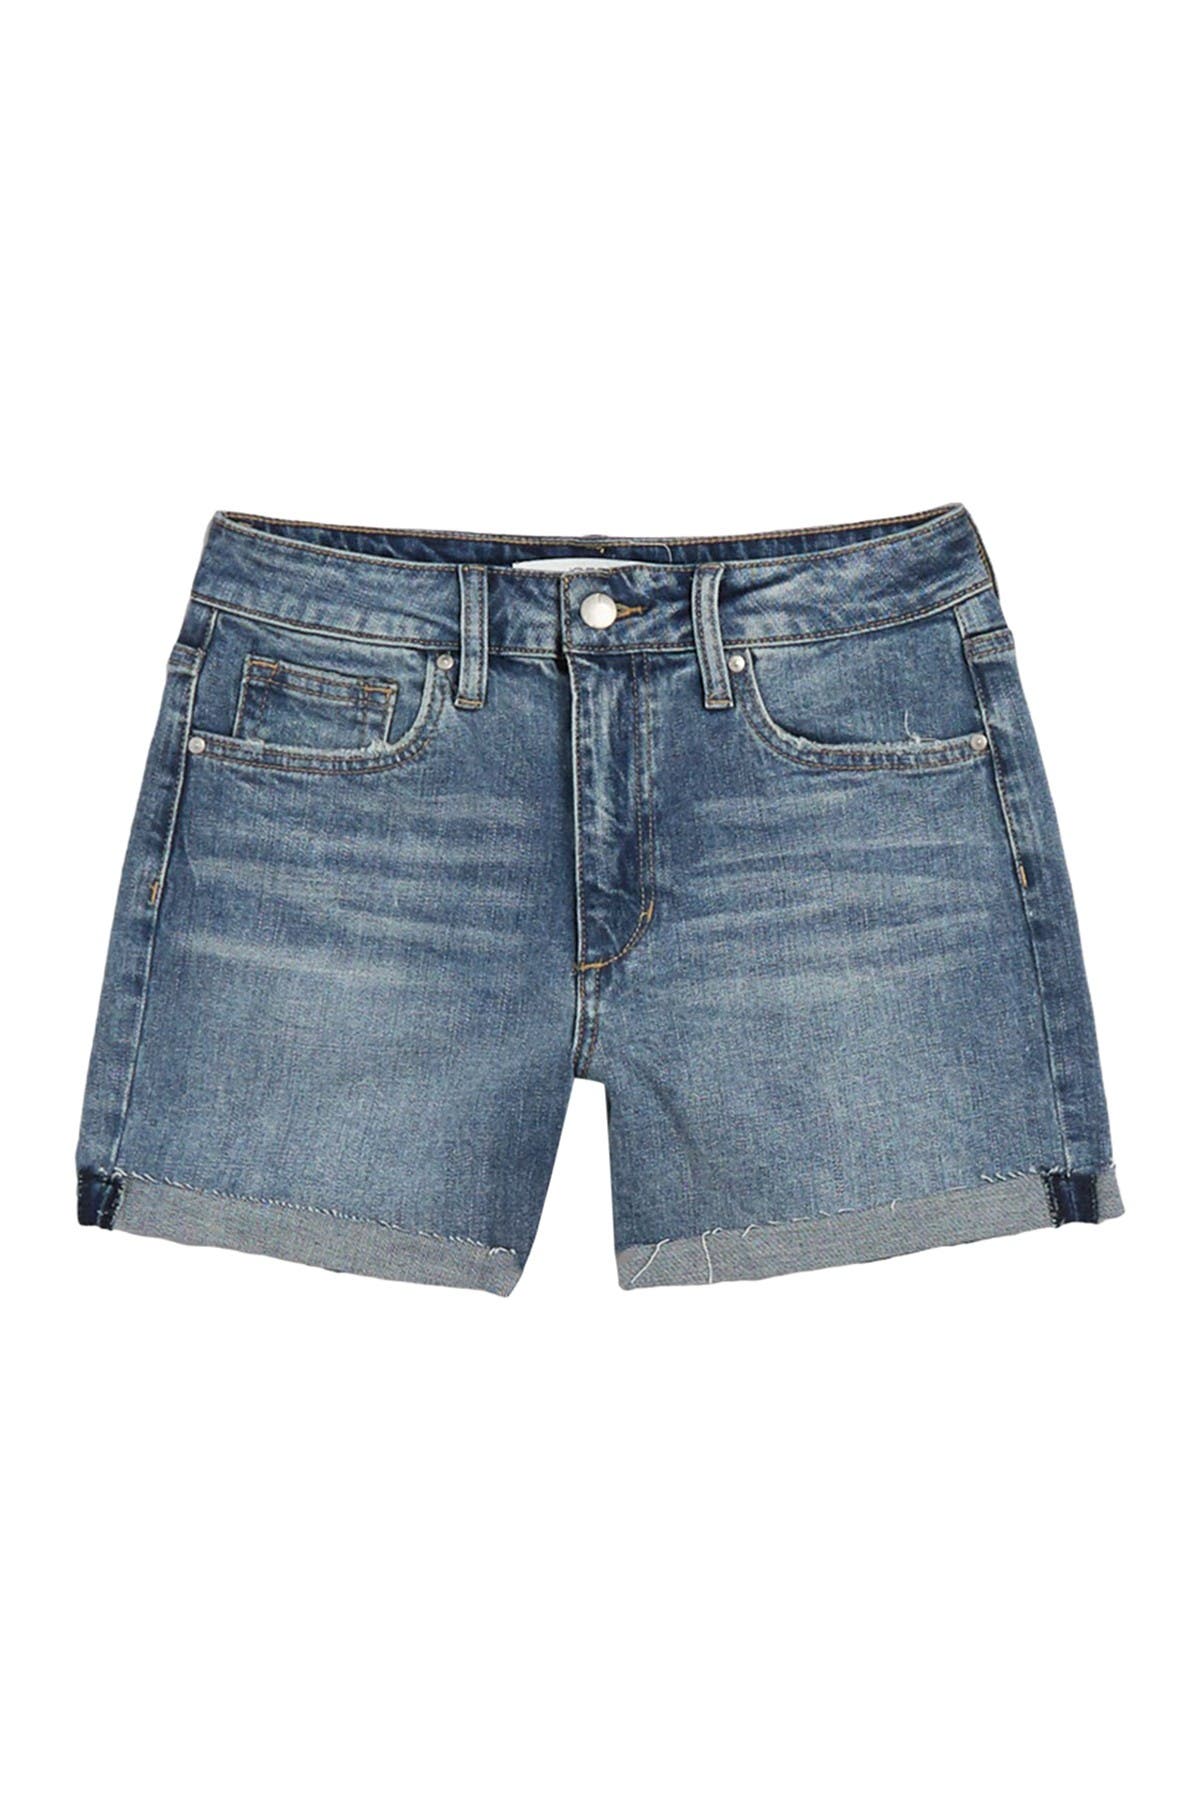 nordstrom jean shorts